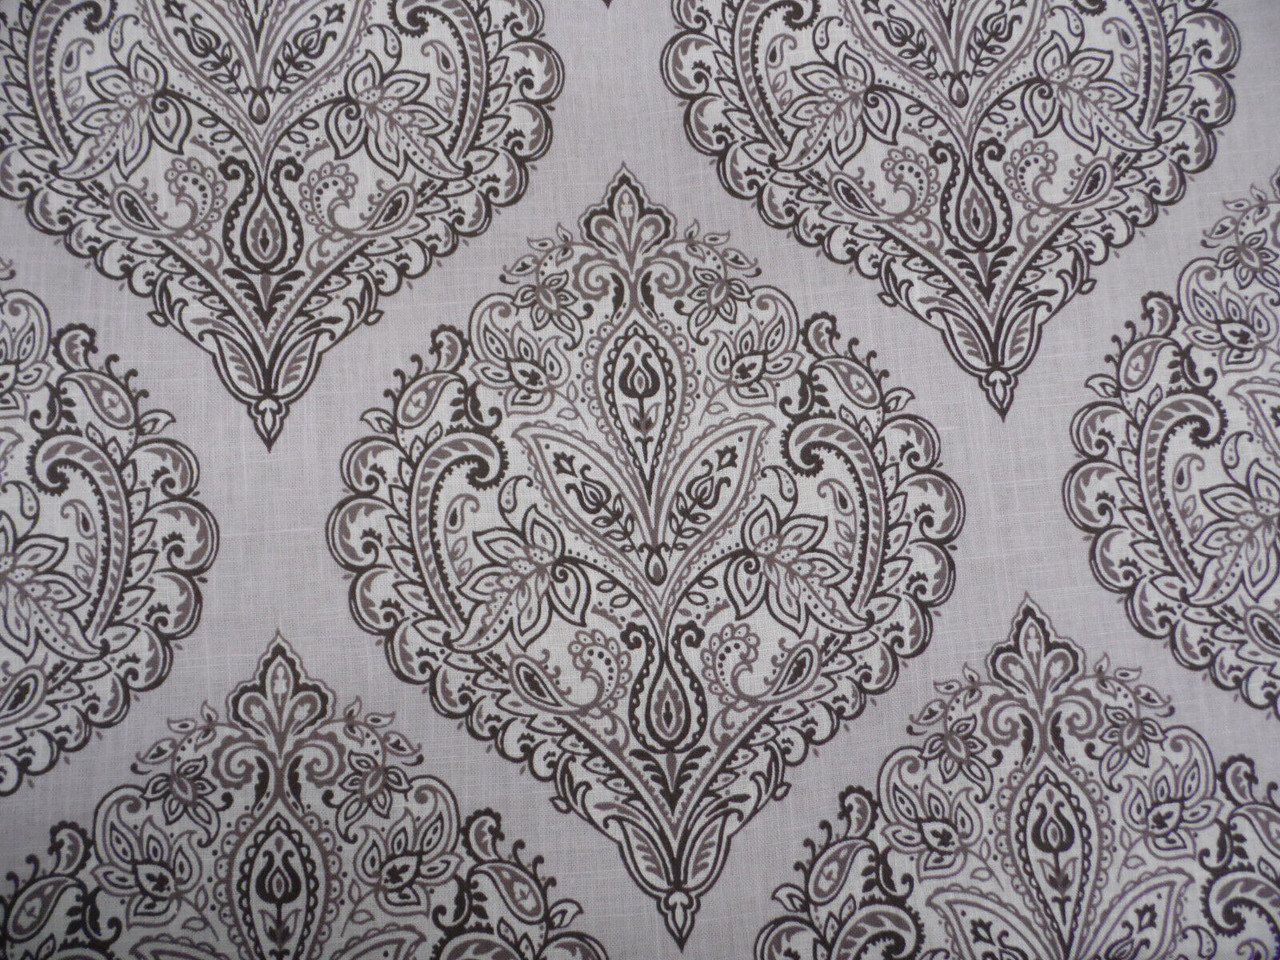 Belle Maison Arabella Linen Upholstery Drapery Fabric Smoke Gray Floral MM35